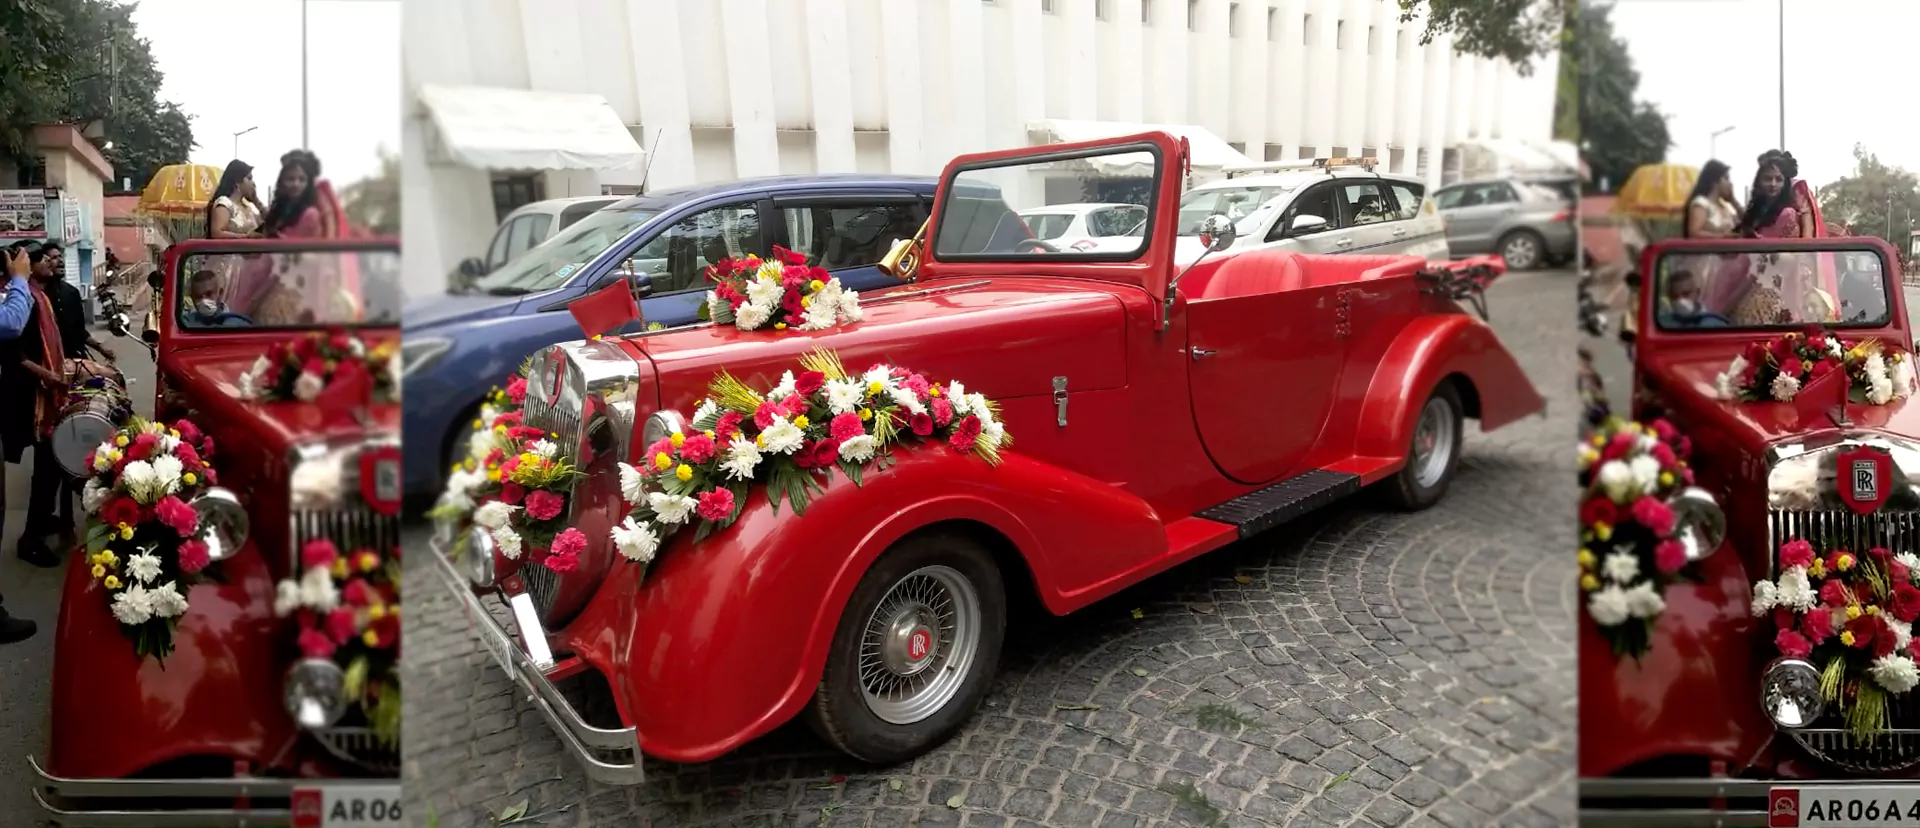 Red Vintage Rolls Royce Car for Wedding